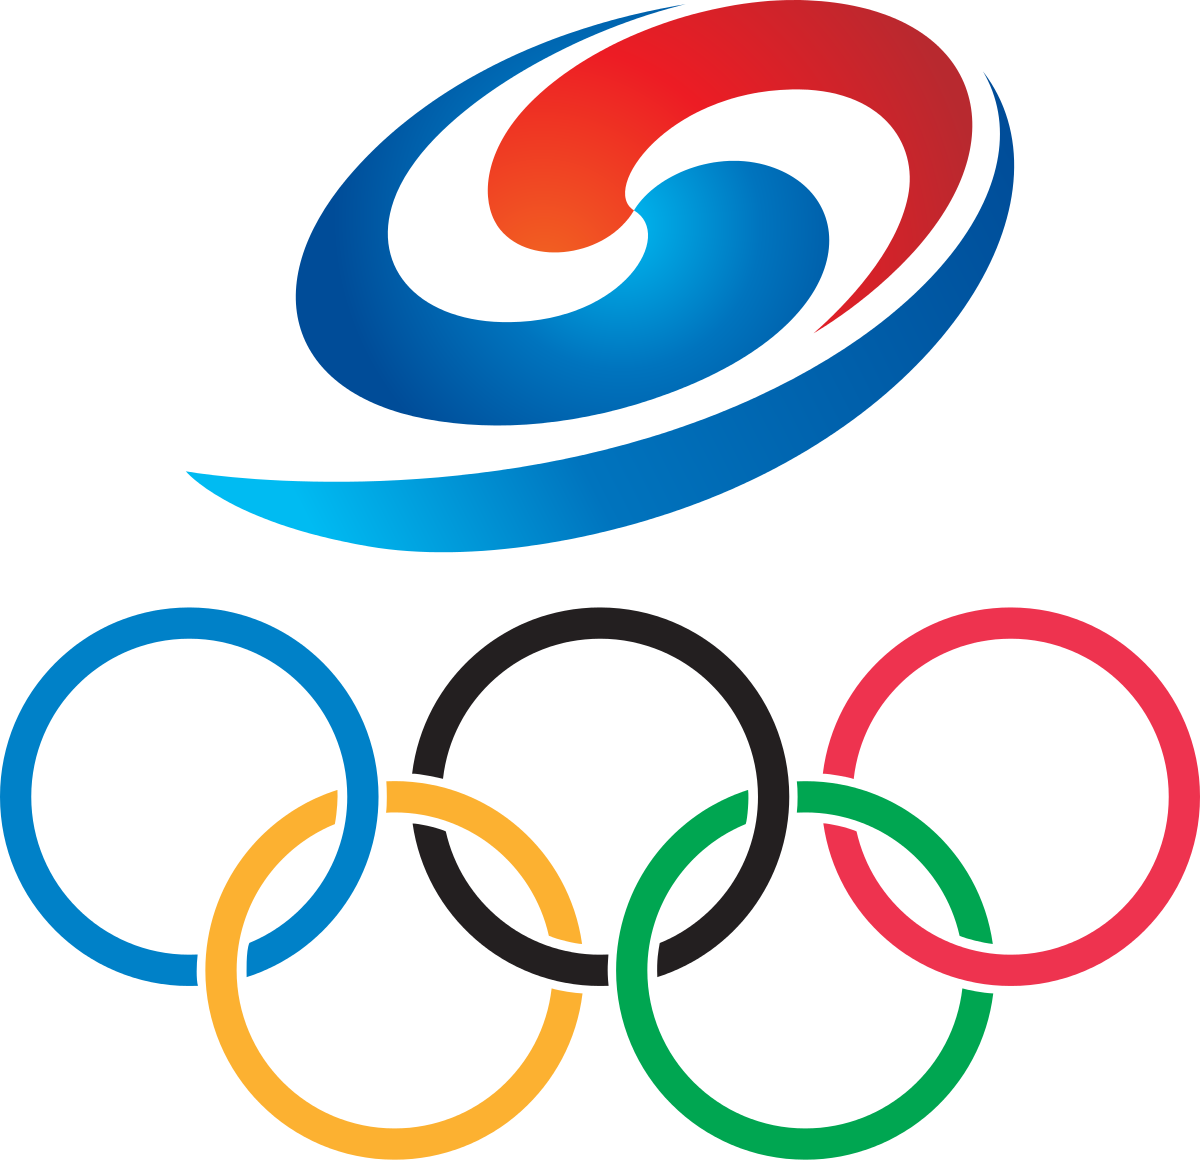 Korean Sport & Olympic Committee (1200x1160)